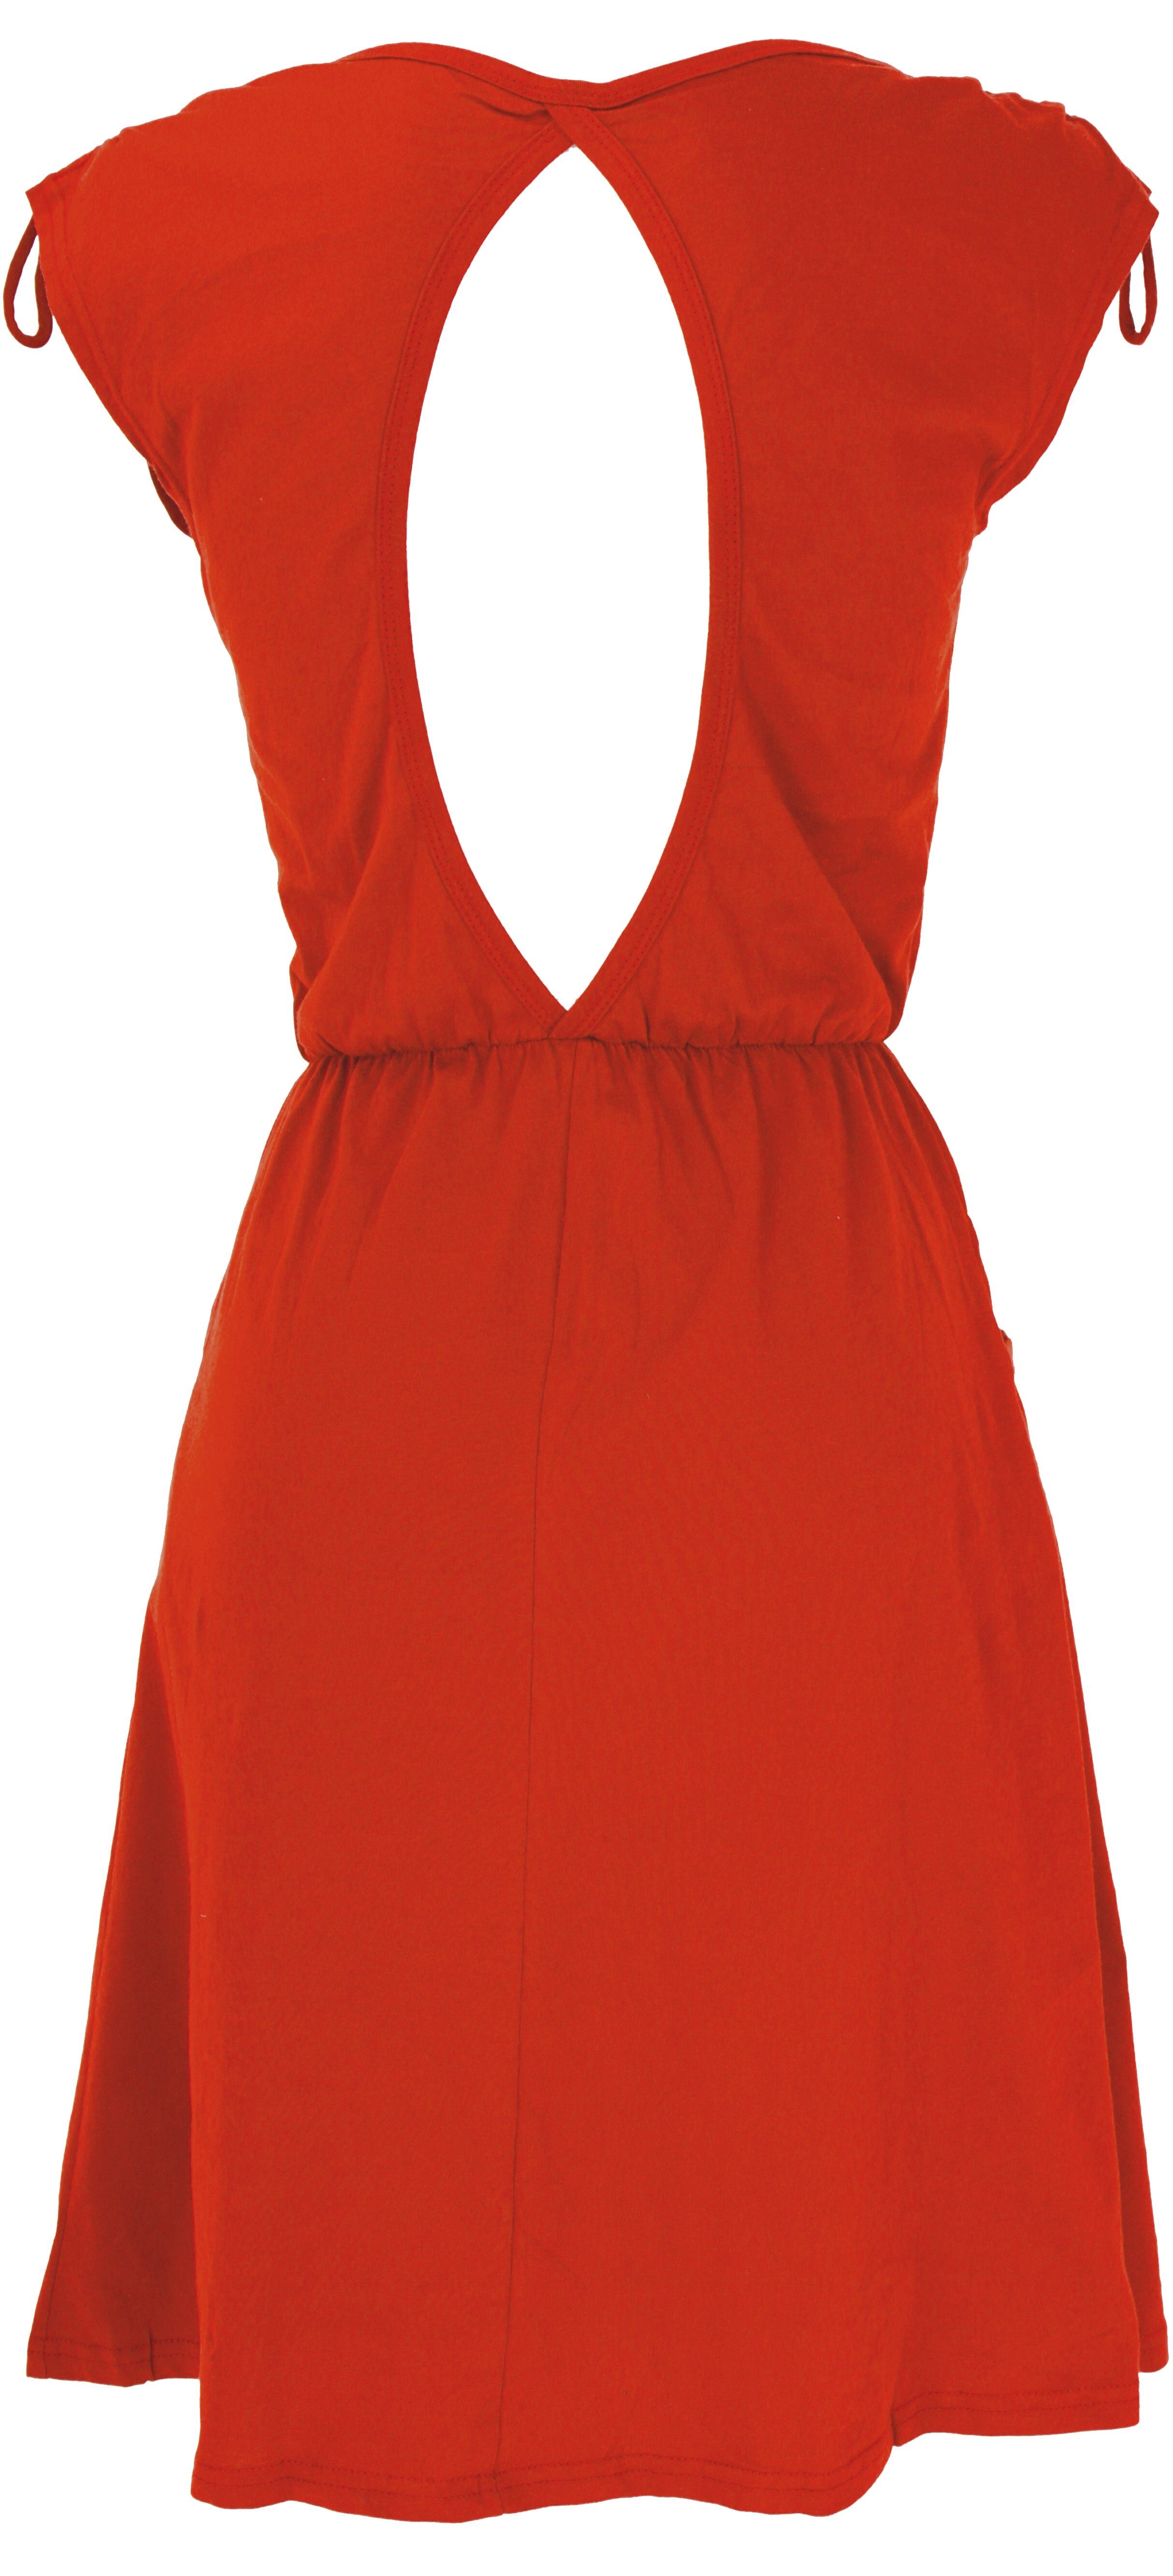 Bekleidung korallrot aus.. rückenfreies alternative Guru-Shop Midikleid Kleid Minikleid, Ethno